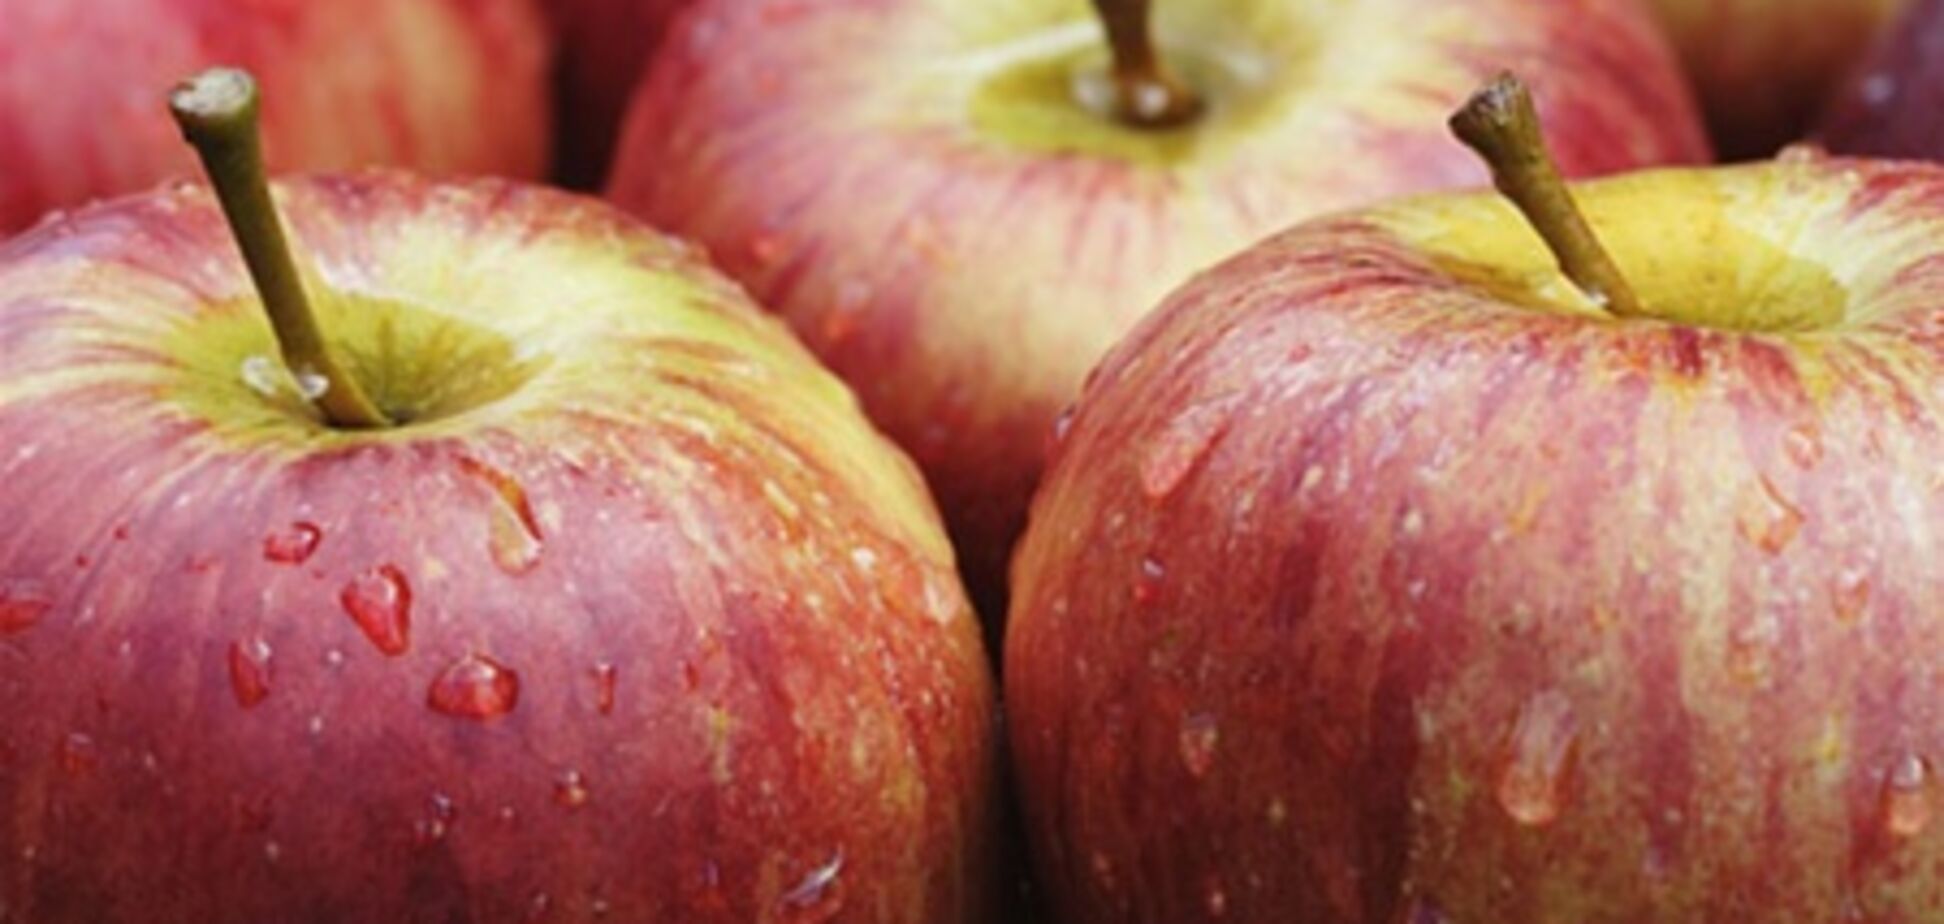 Прогноз цен на февраль: яблоки в 'плюсах'